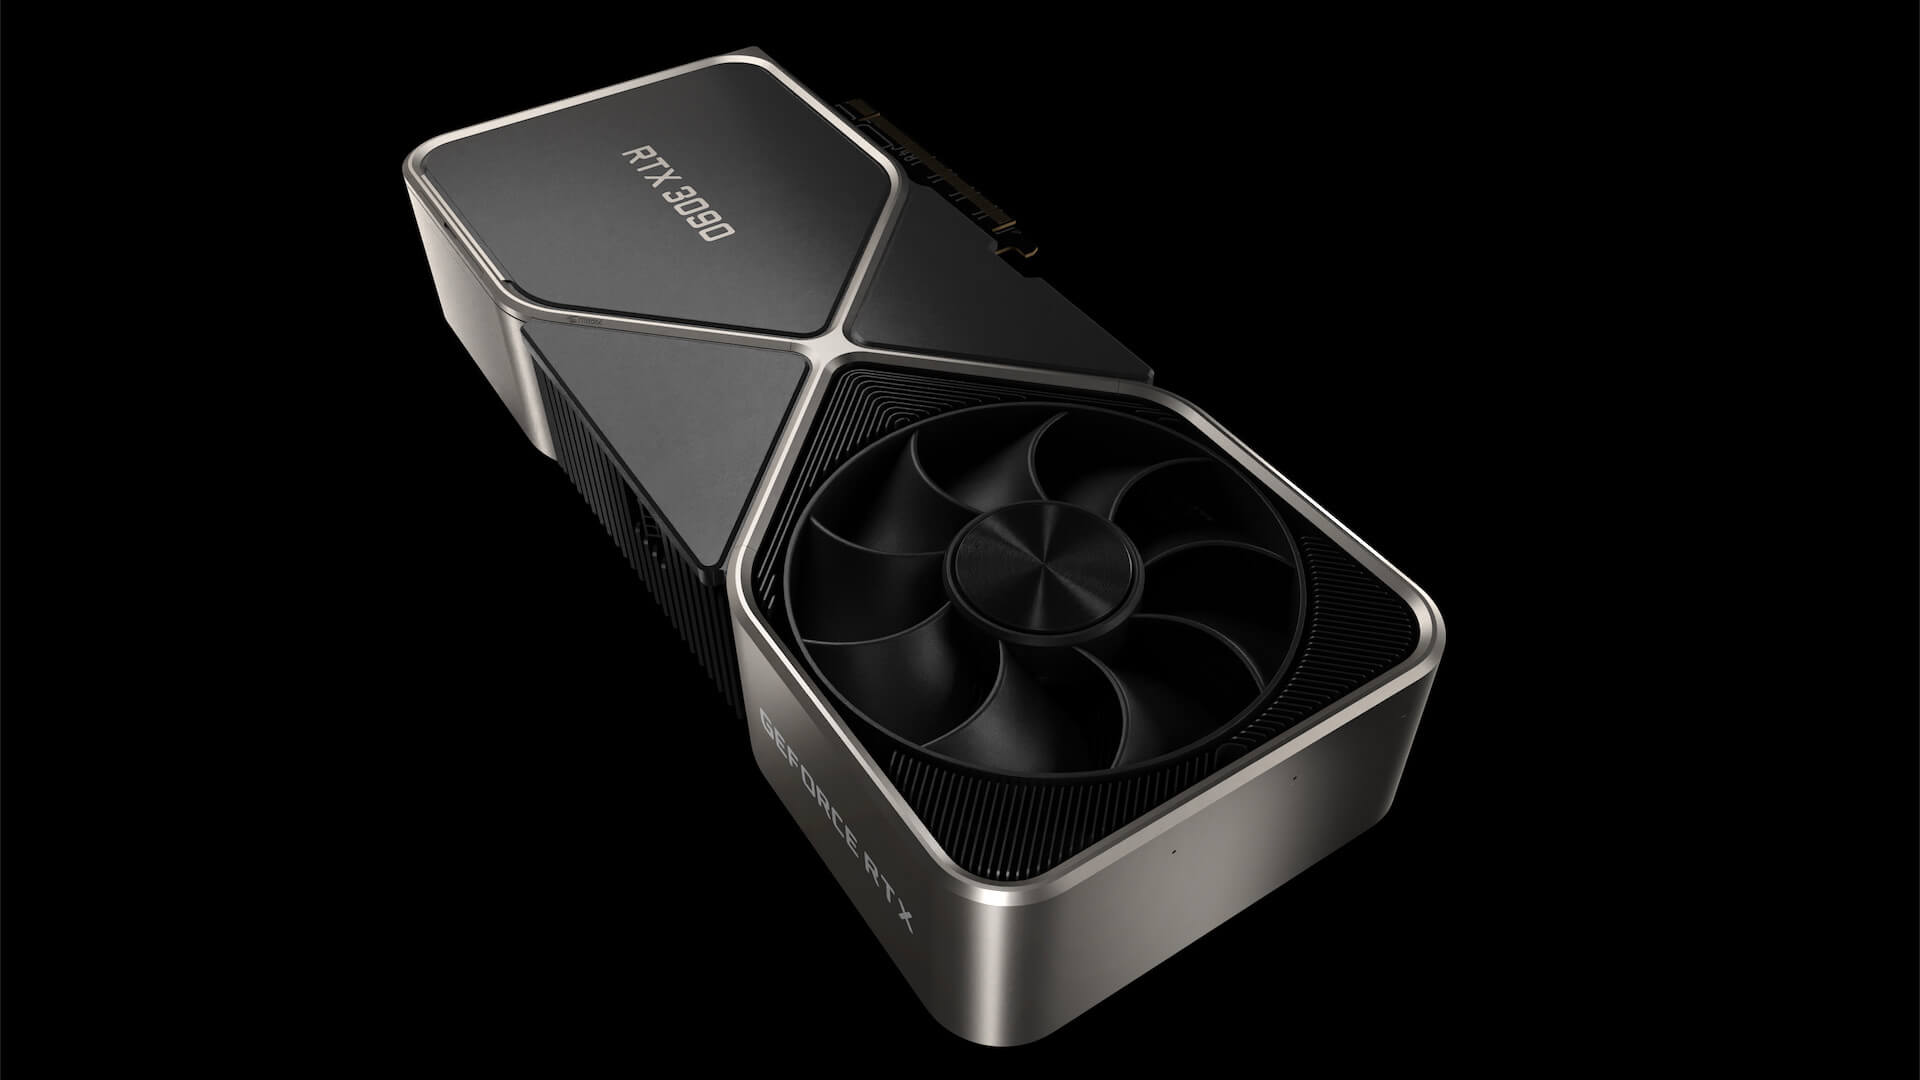 NVIDIA снизила стоимость своих топовых видеокарт – GeForce RTX 3090 Ti Founders Edition подешевела на 920 евро